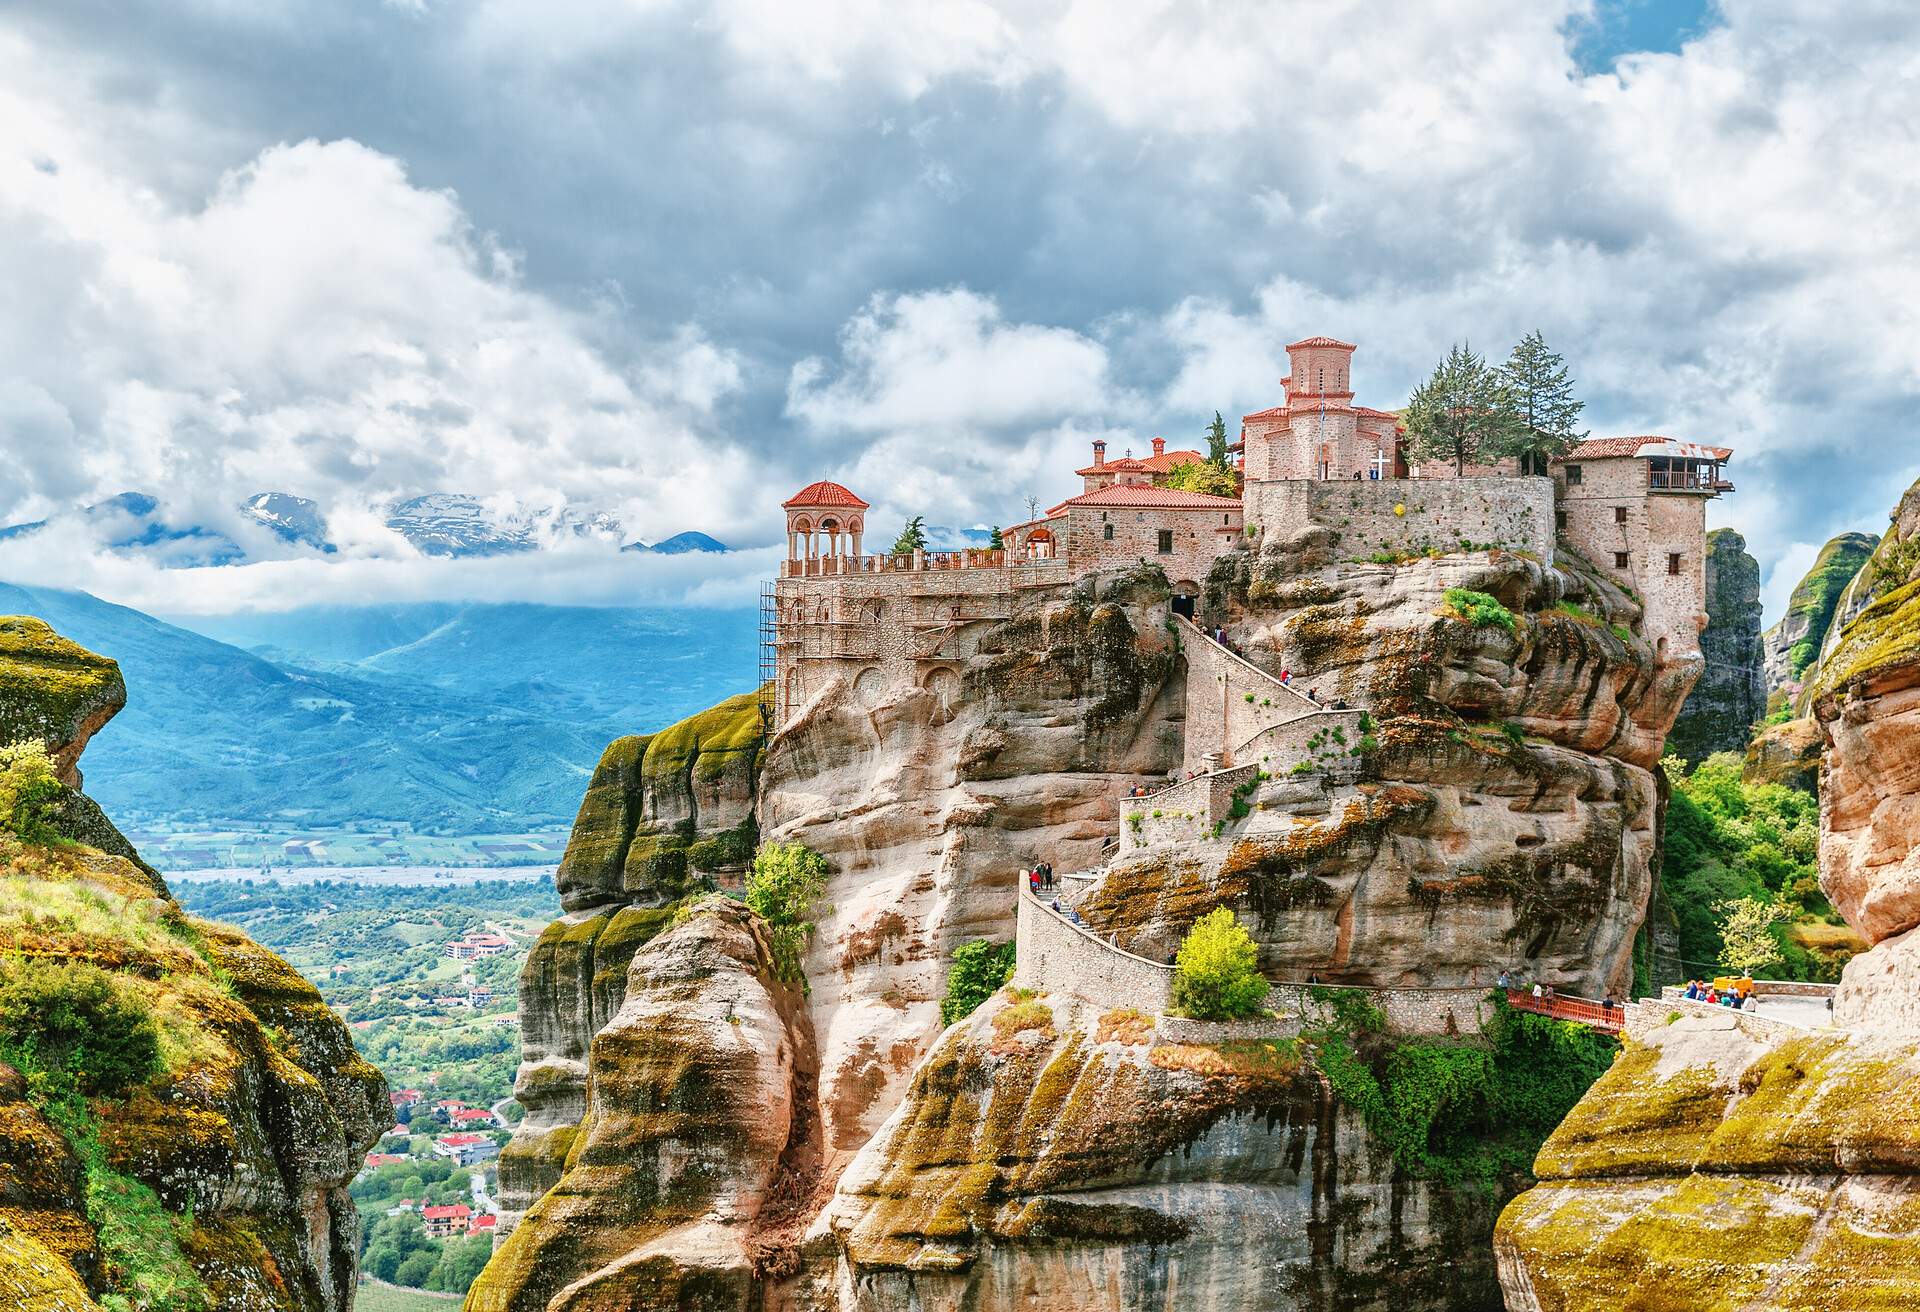 Meteora monastery, Greece. UNESCO heritage list.